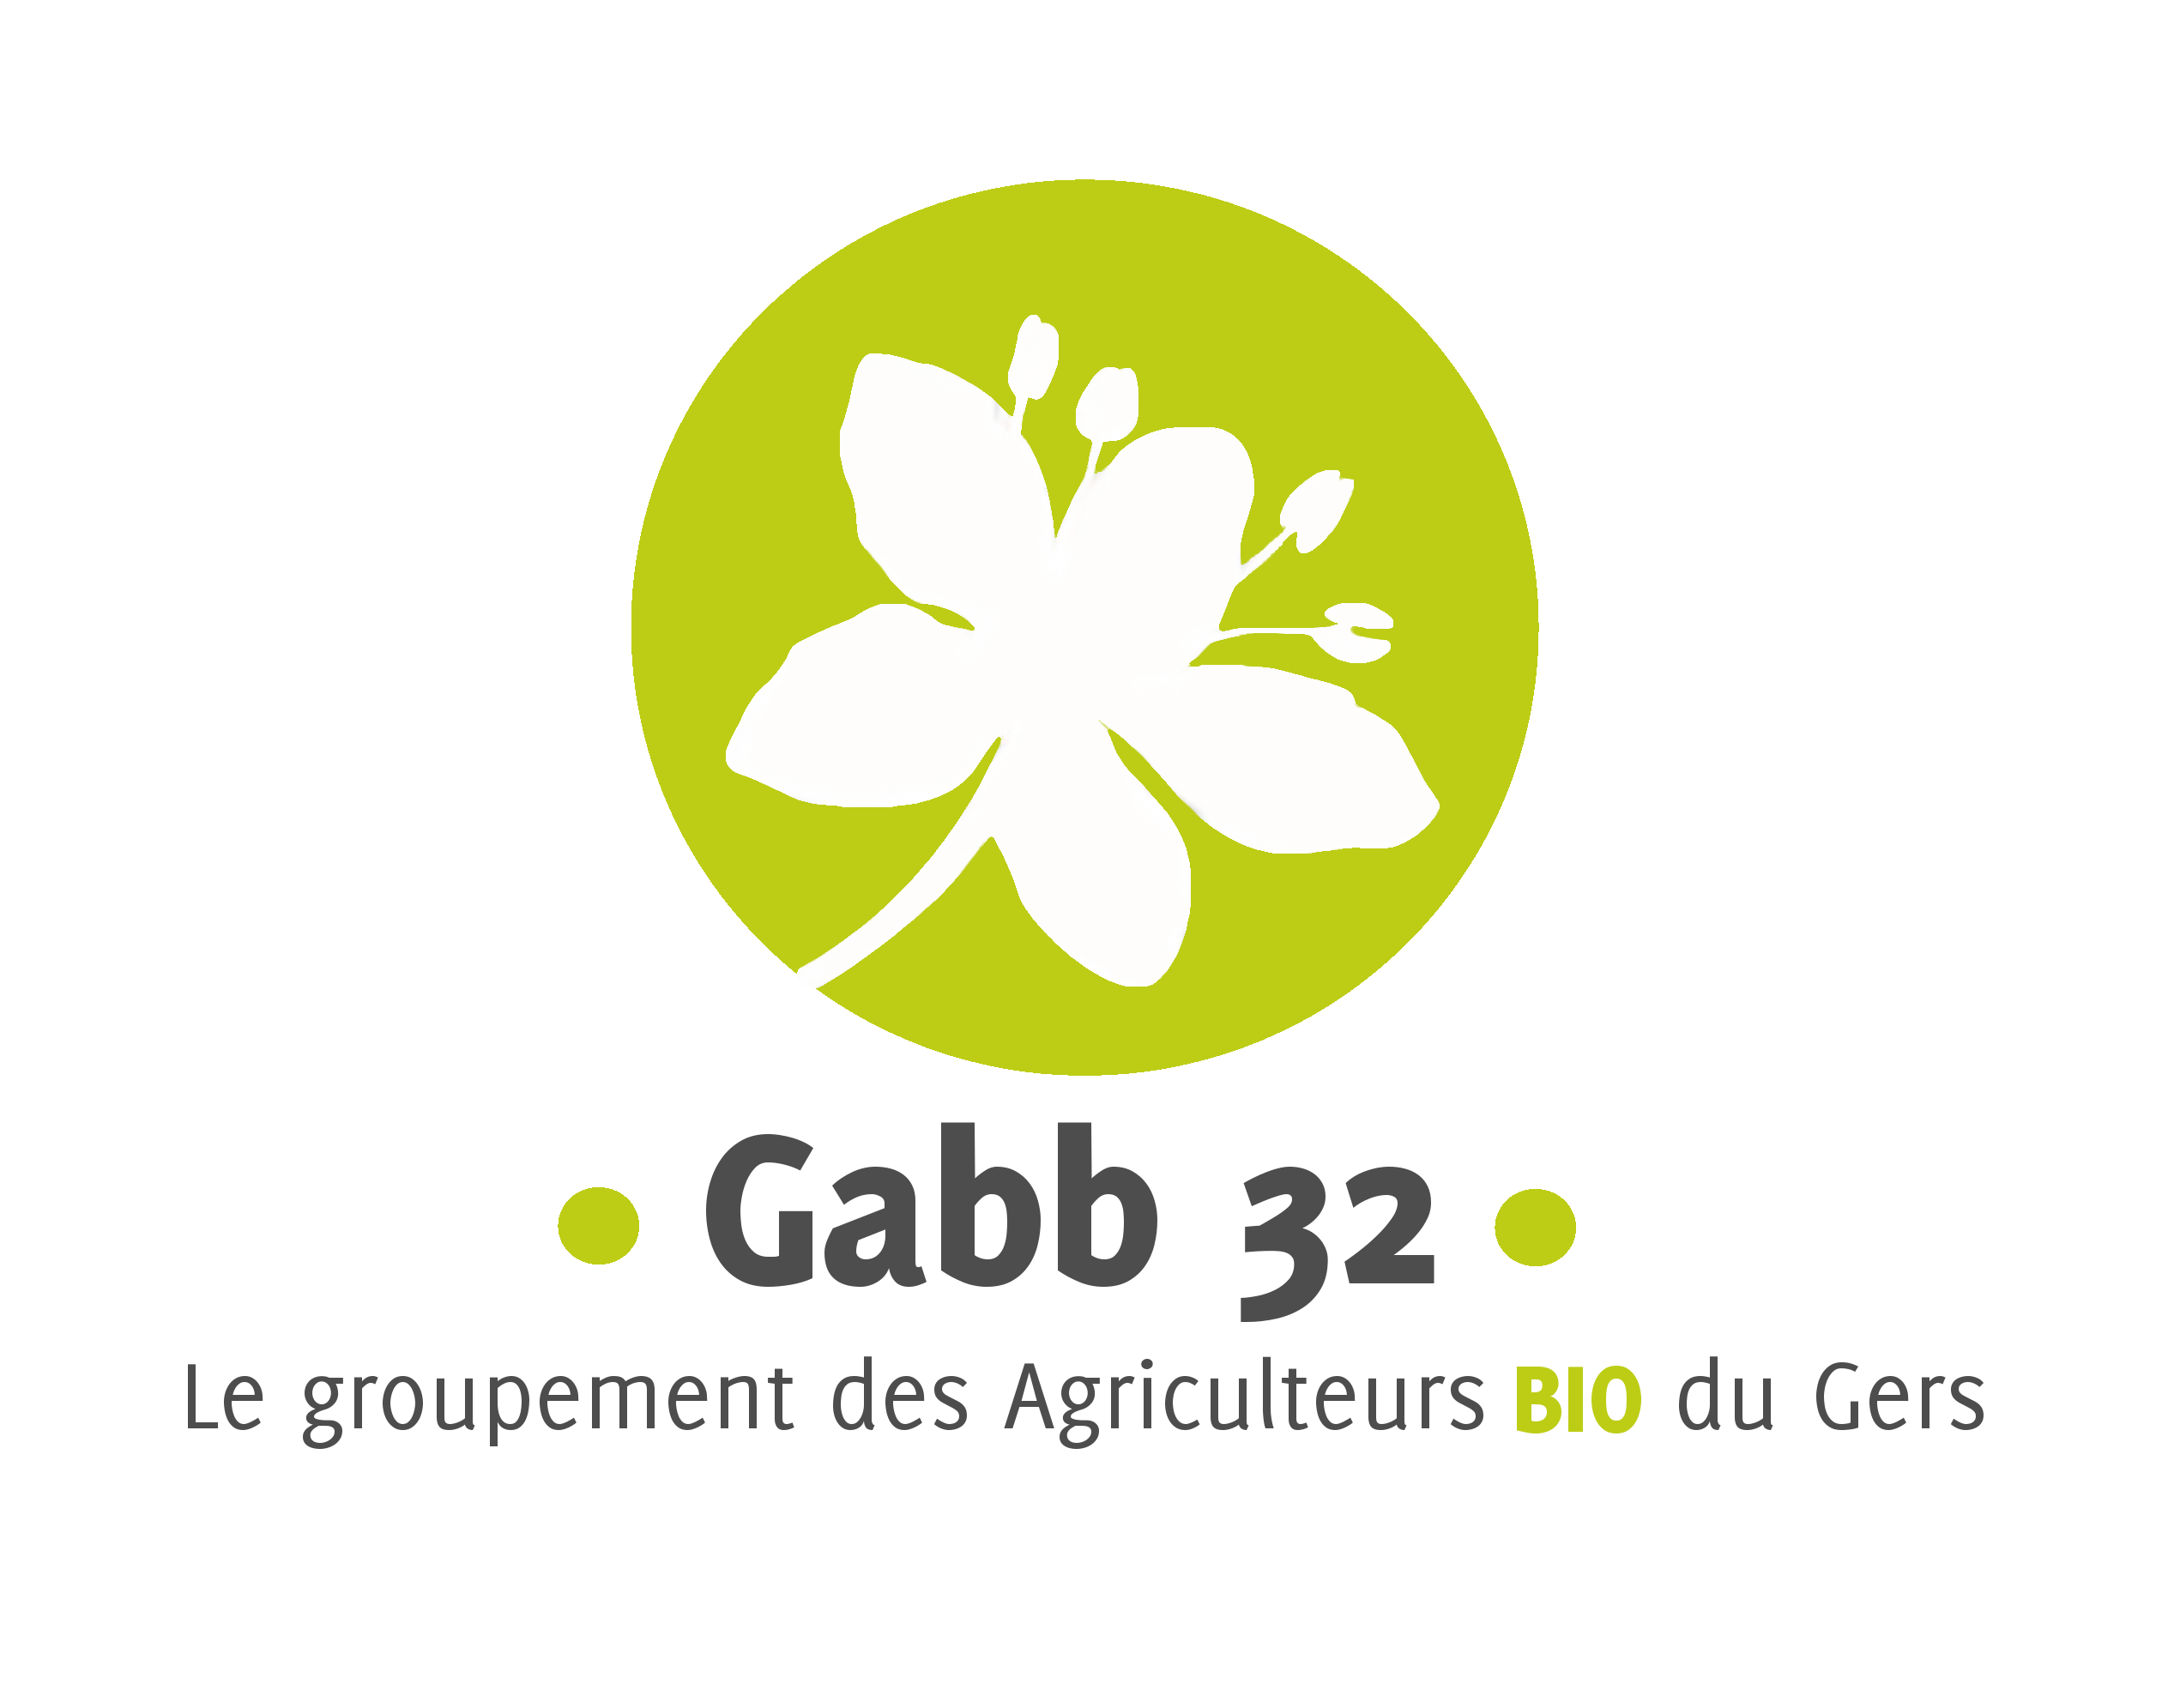 Gabb32